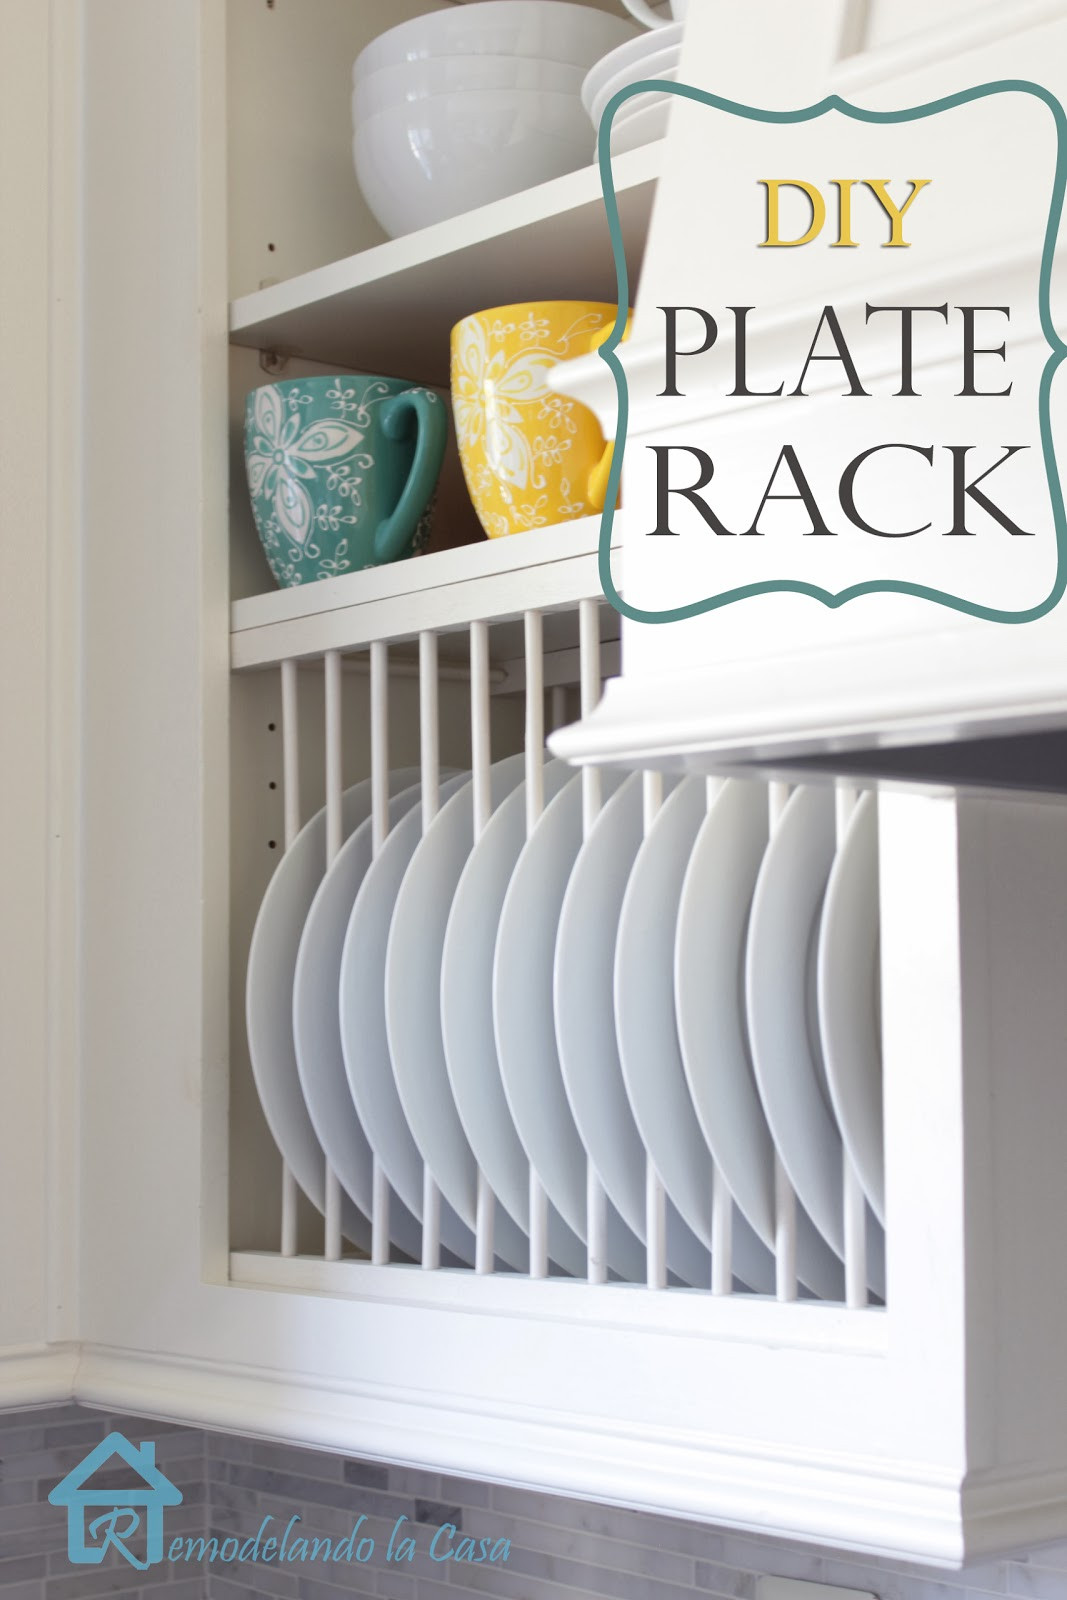 Best ideas about DIY Plate Racks
. Save or Pin DIY Inside Cabinet Plate Rack Remodelando la Casa Now.